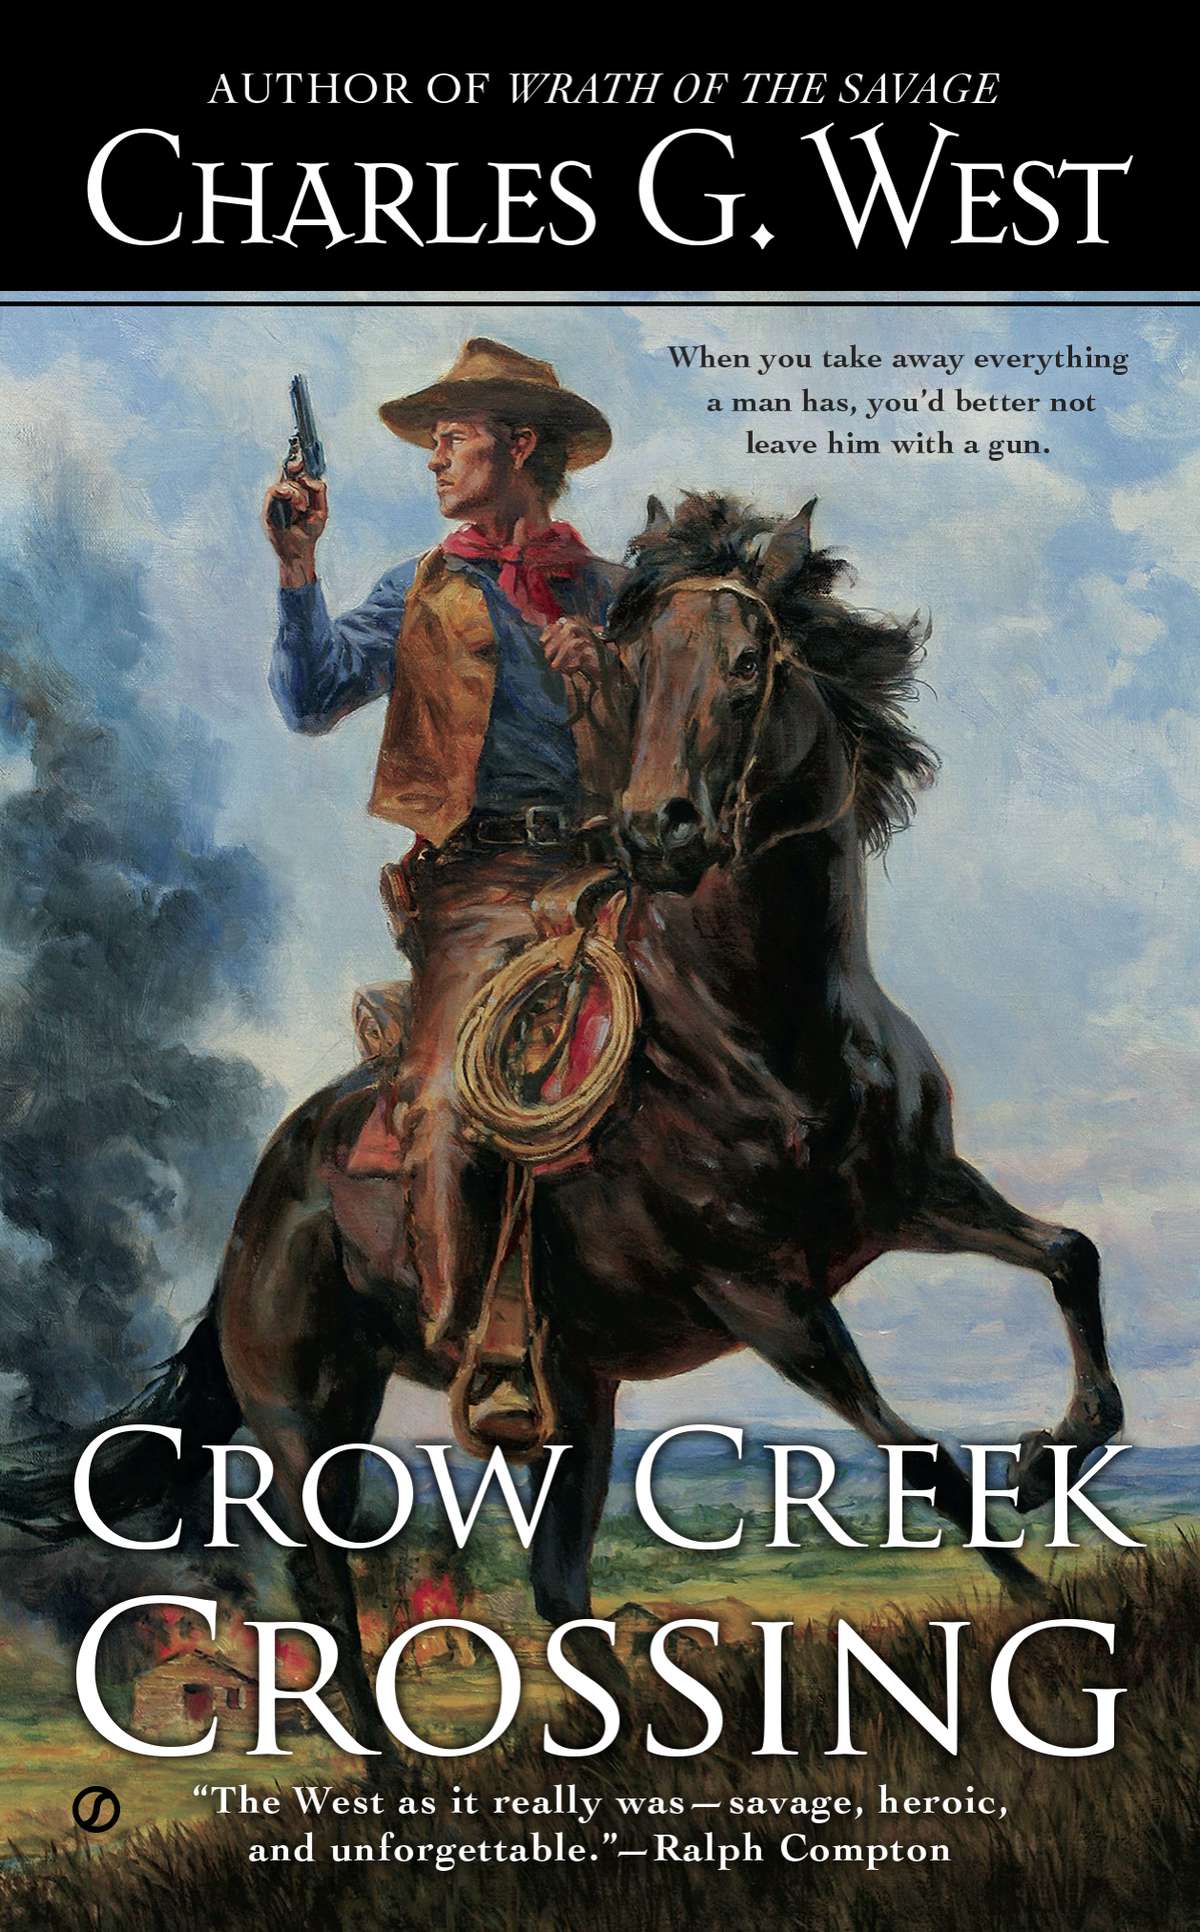 Crow Creek Crossing (2014) by Charles G. West